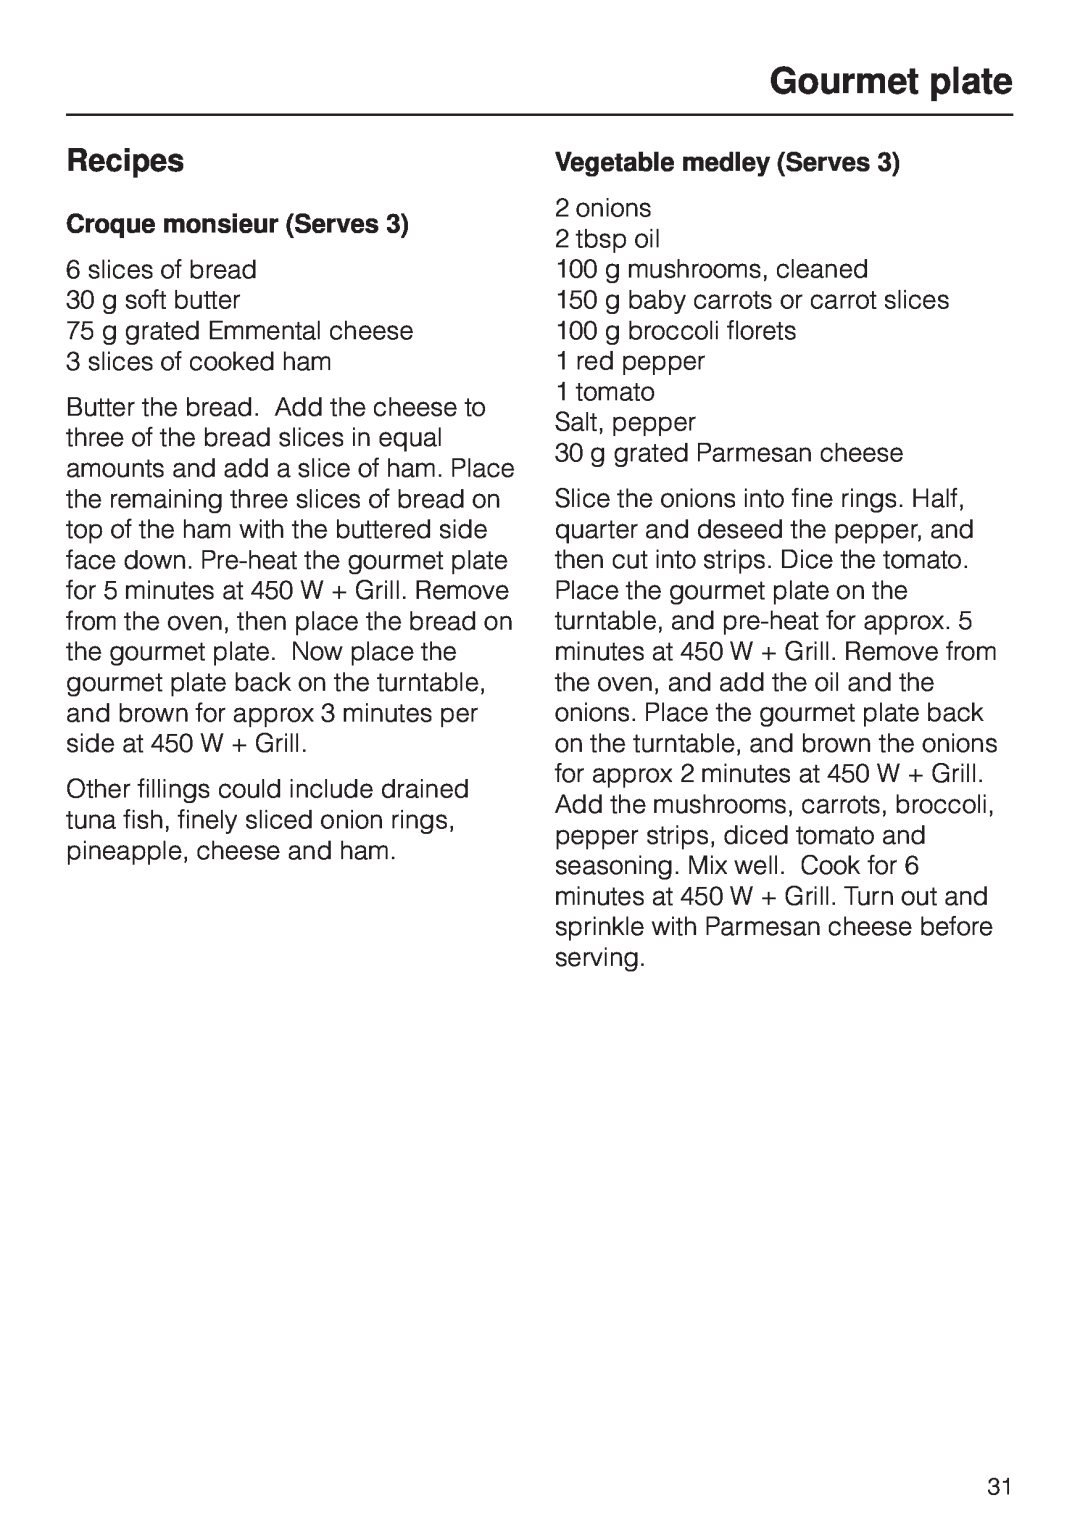 Miele M 8261 manual Recipes, Croque monsieur Serves, Vegetable medley Serves, Gourmet plate 